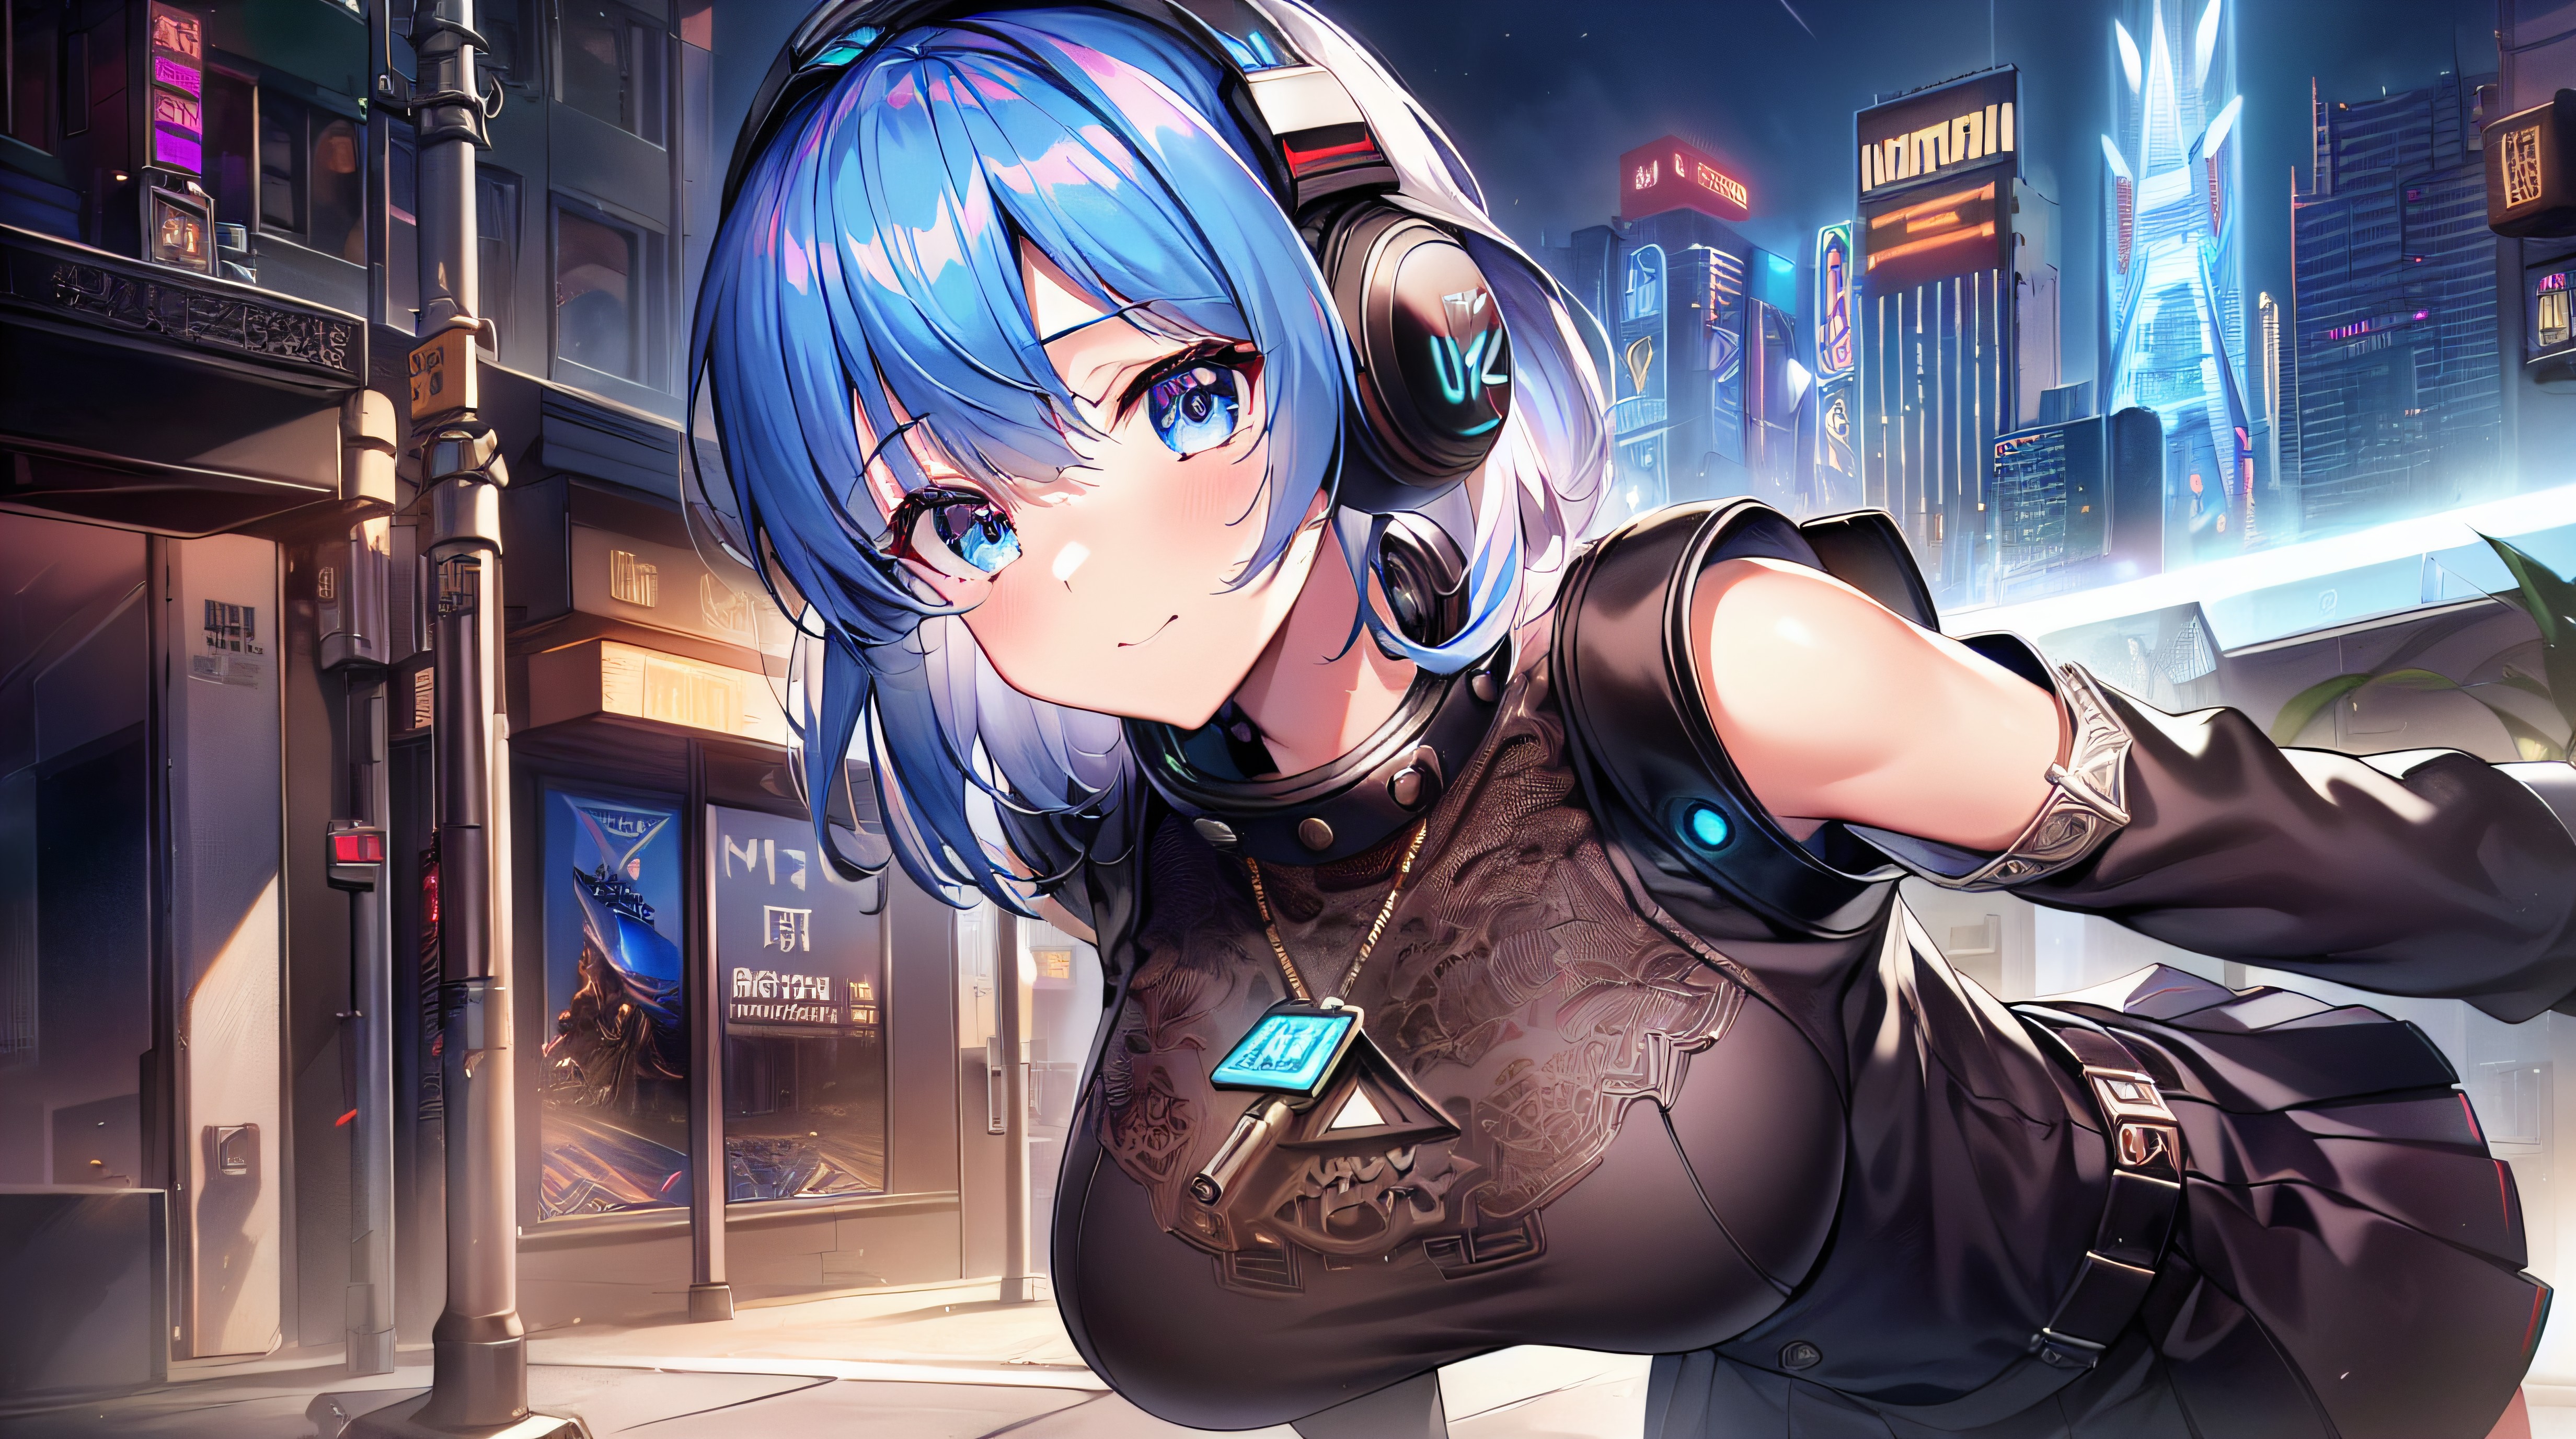 cyberpunk city girl by Subaru_sama